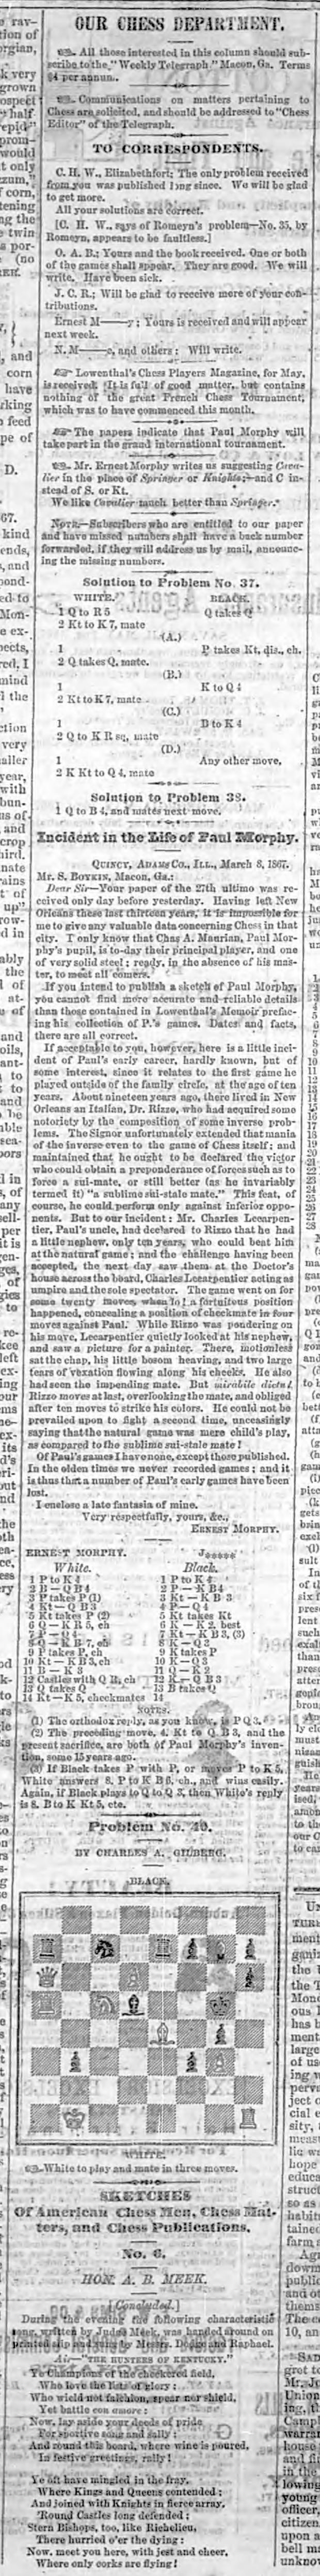 1867.05.31-01 Macon Georgia Weekly Telegraph.jpg